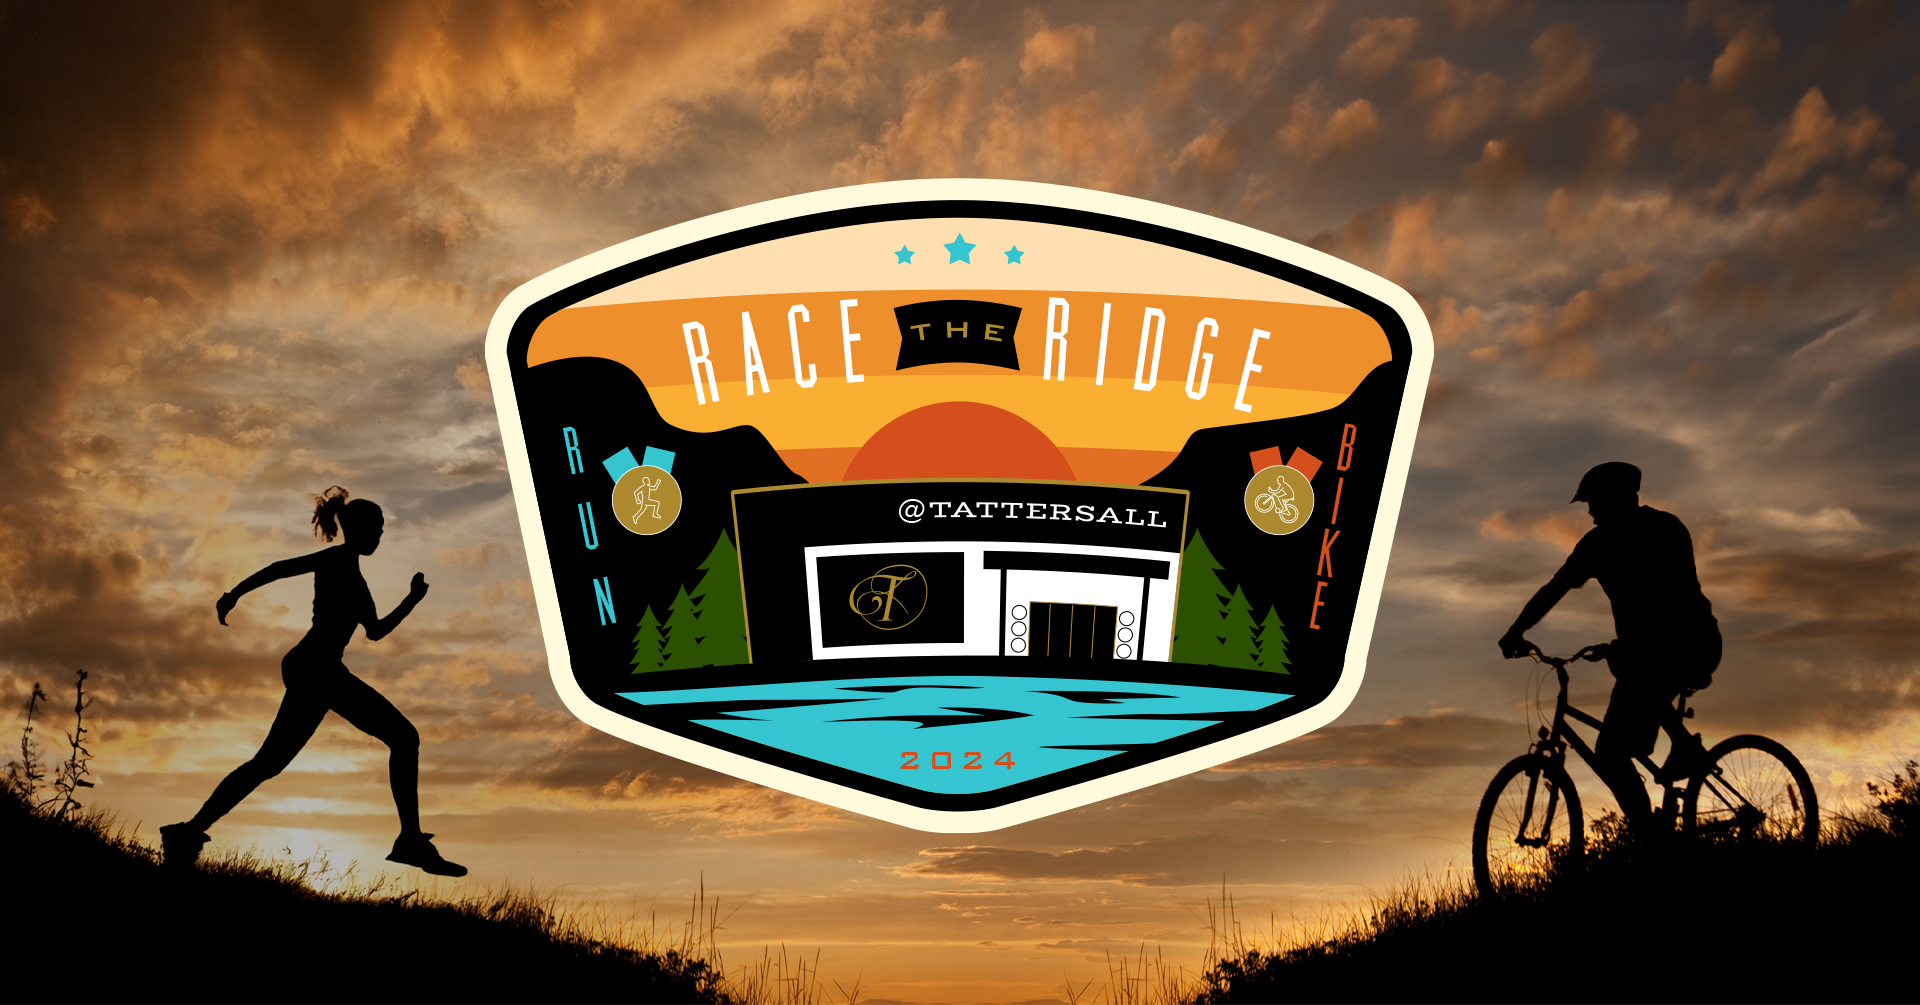 Race the Ridge at Tattersall